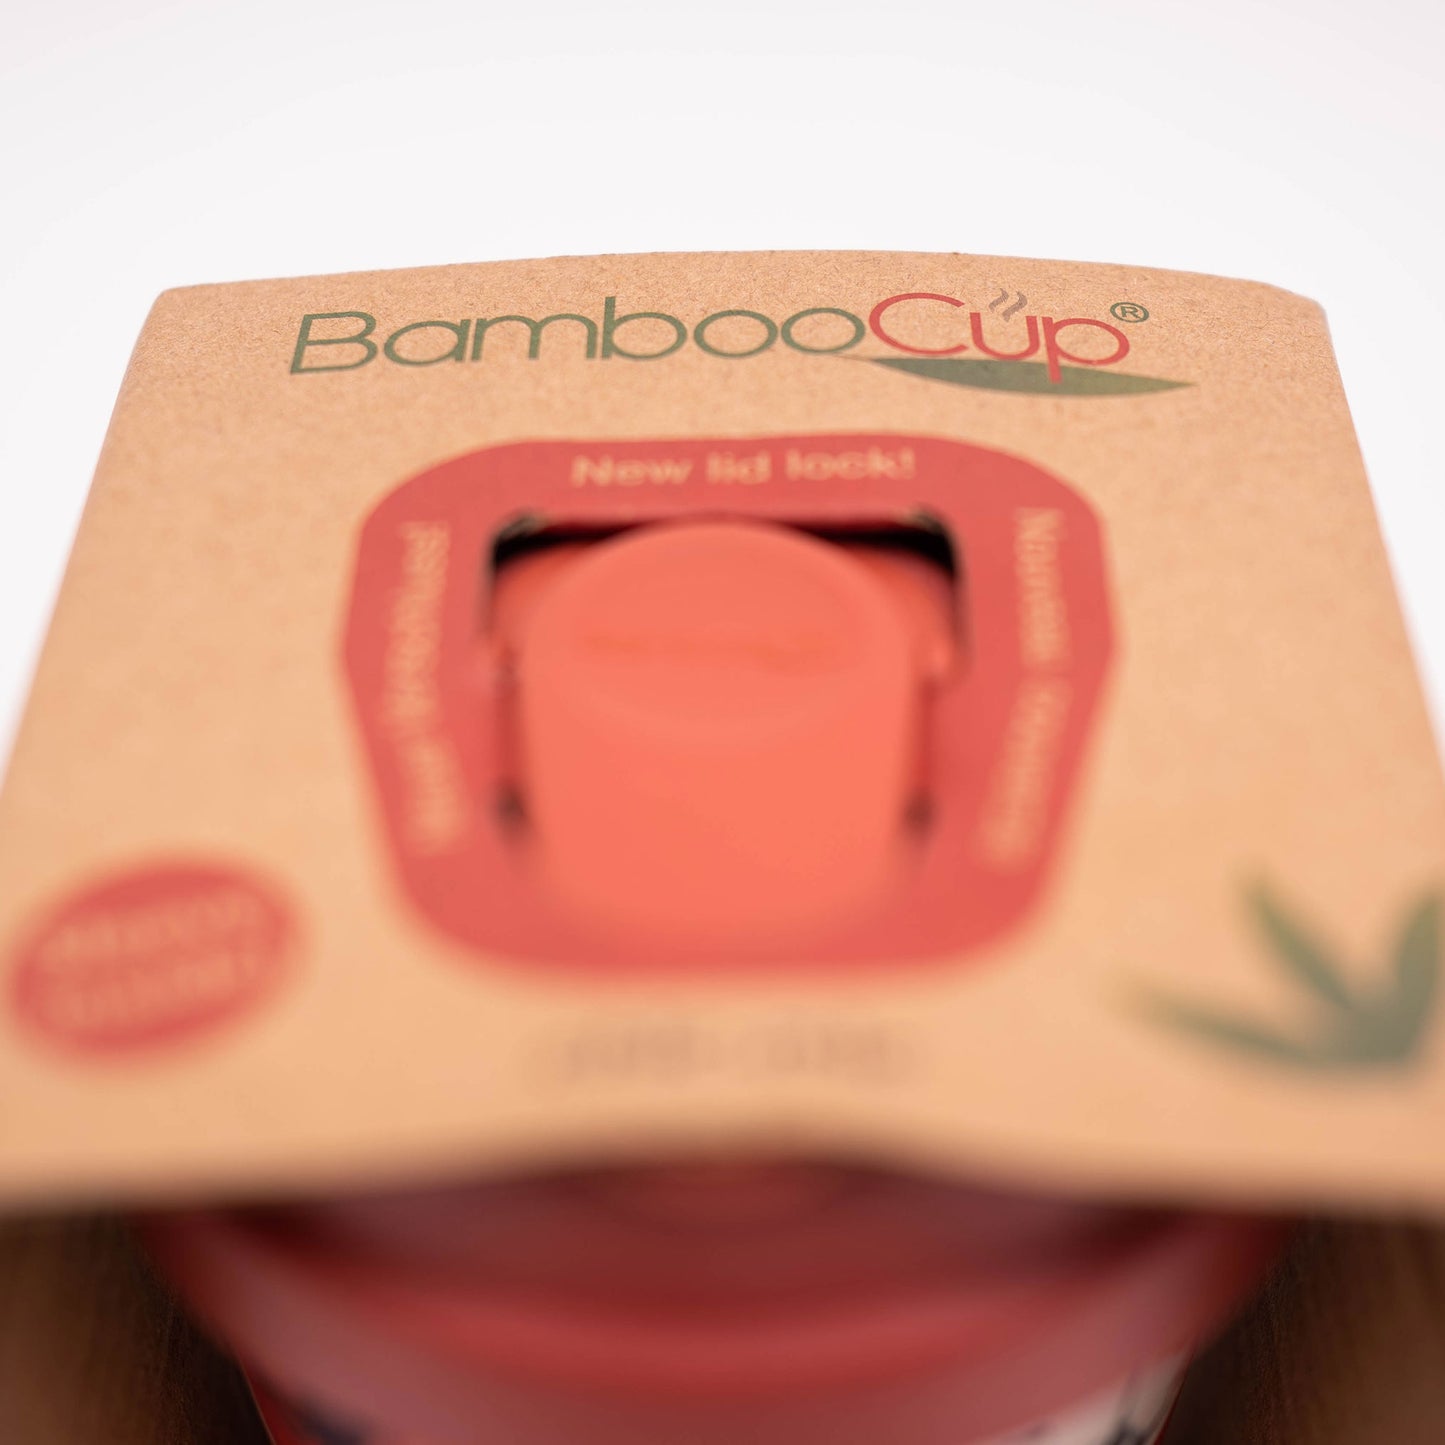 Around The World 400ml Eco friendly Bamboo Mug with Silicon Grip